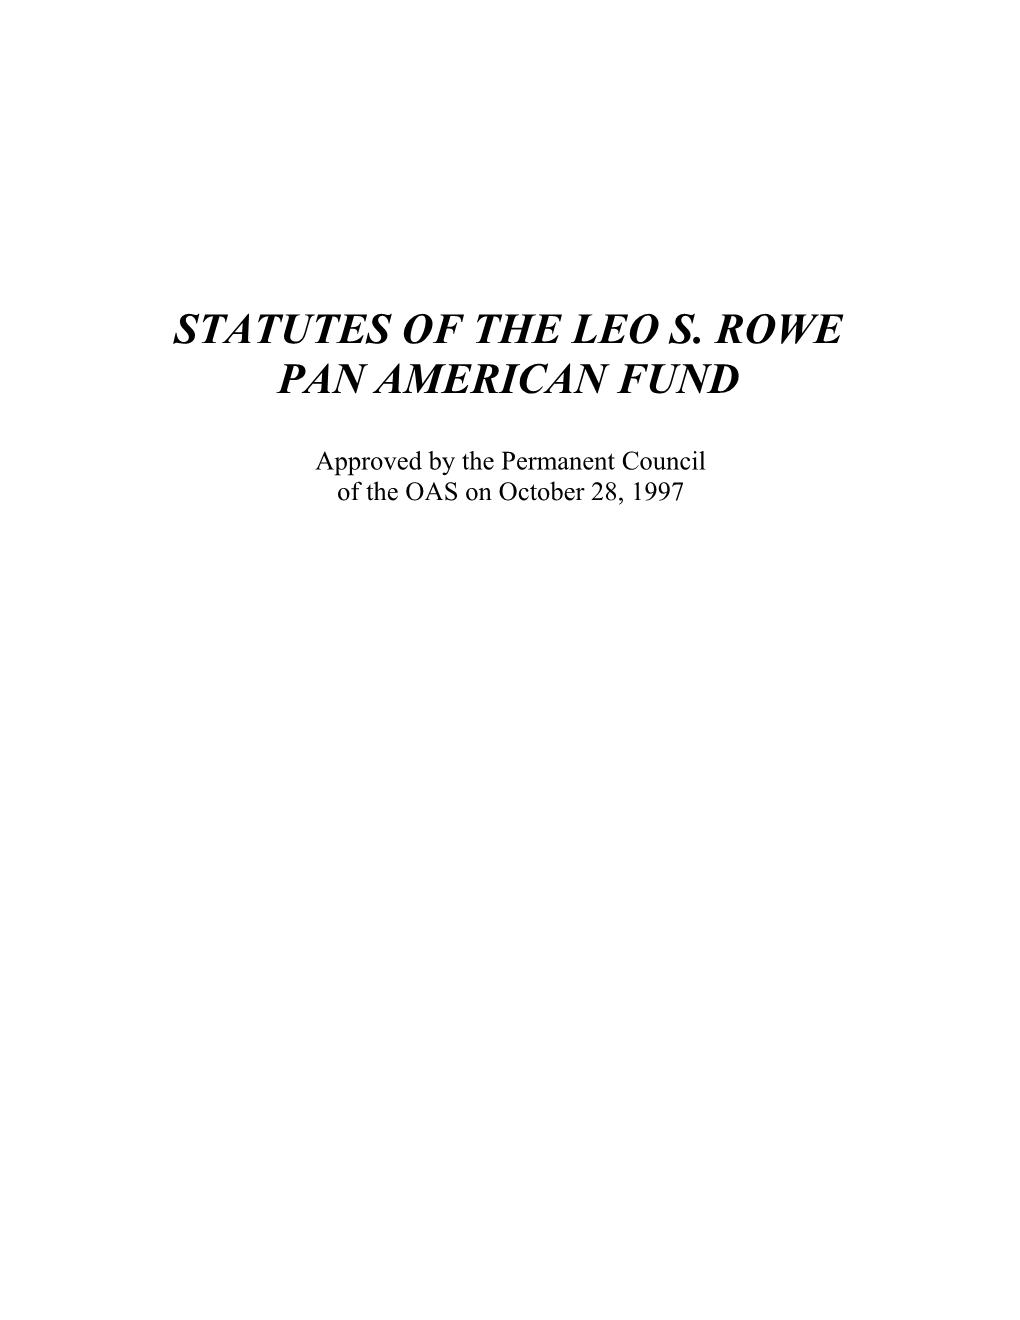 Statutes of the Leo S. Rowe